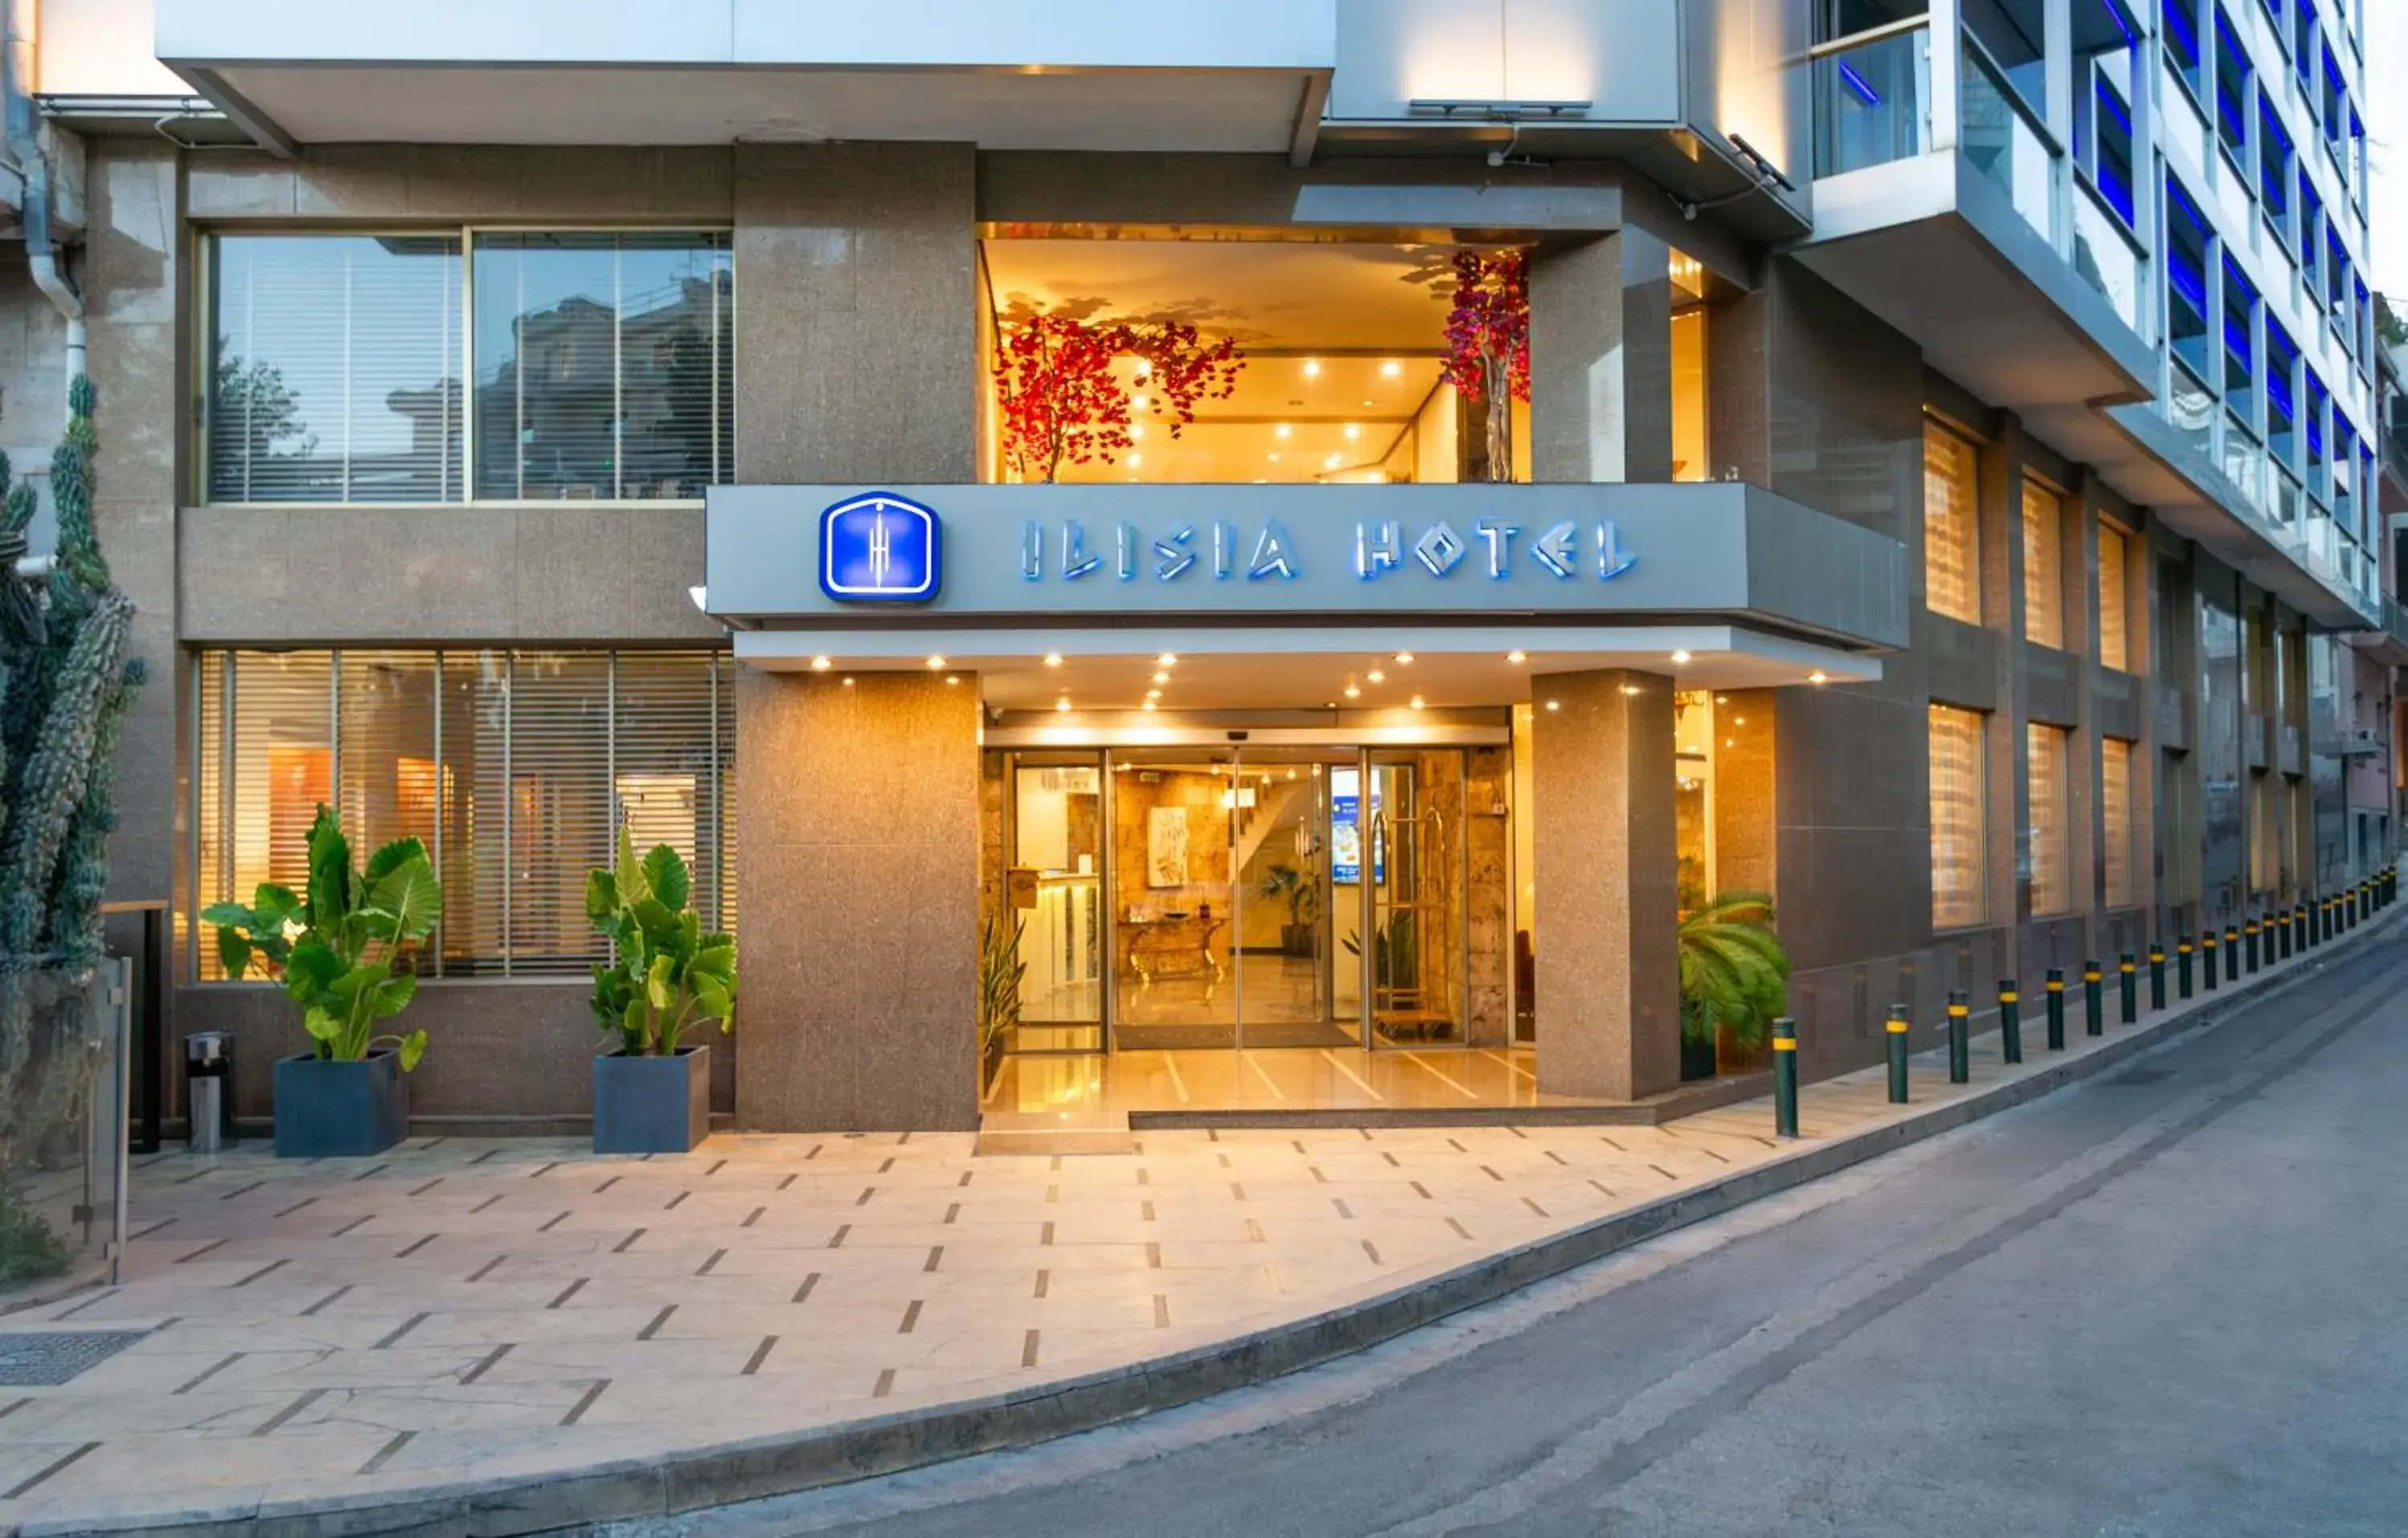 Facade/entrance in Ilisia Hotel Athens